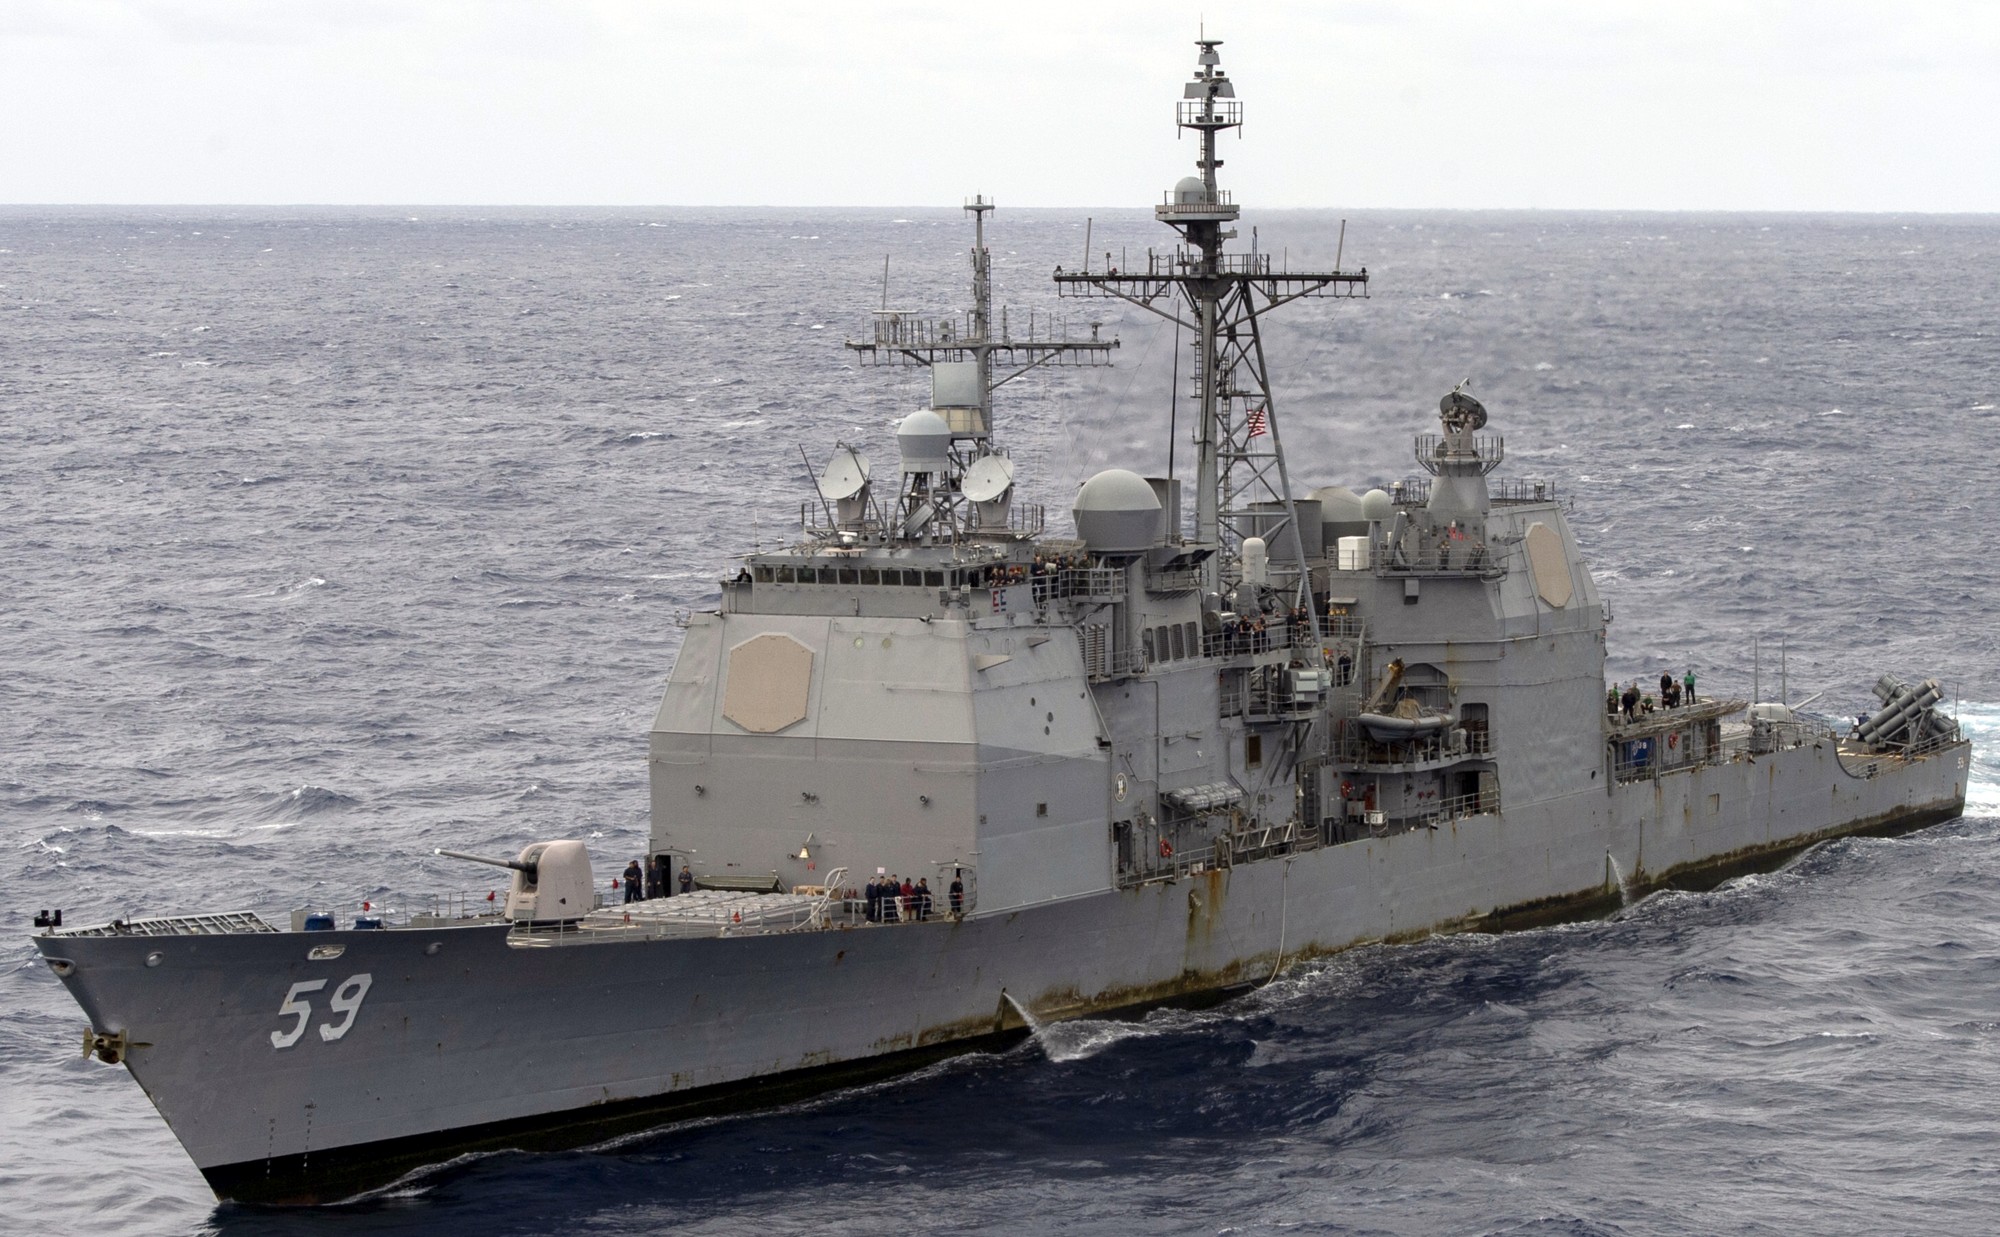 cg-59 uss princeton ticonderoga class guided missile cruiser aegis us navy ingalls shipbuilding pascagoula 109x